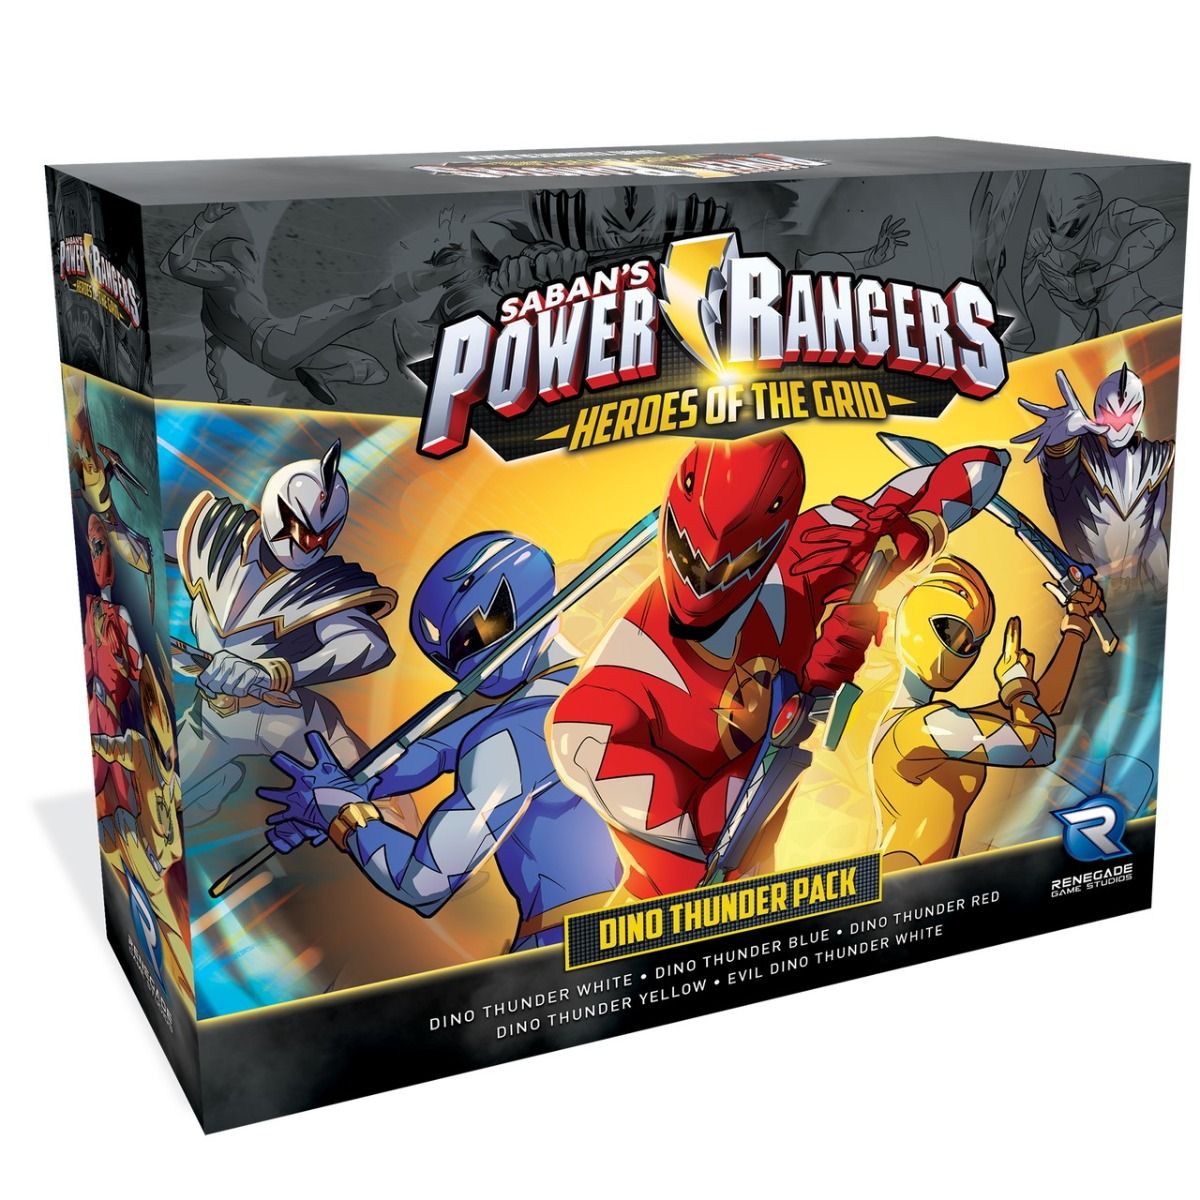 Power Rangers Heroes of the Grid Dino Thunder